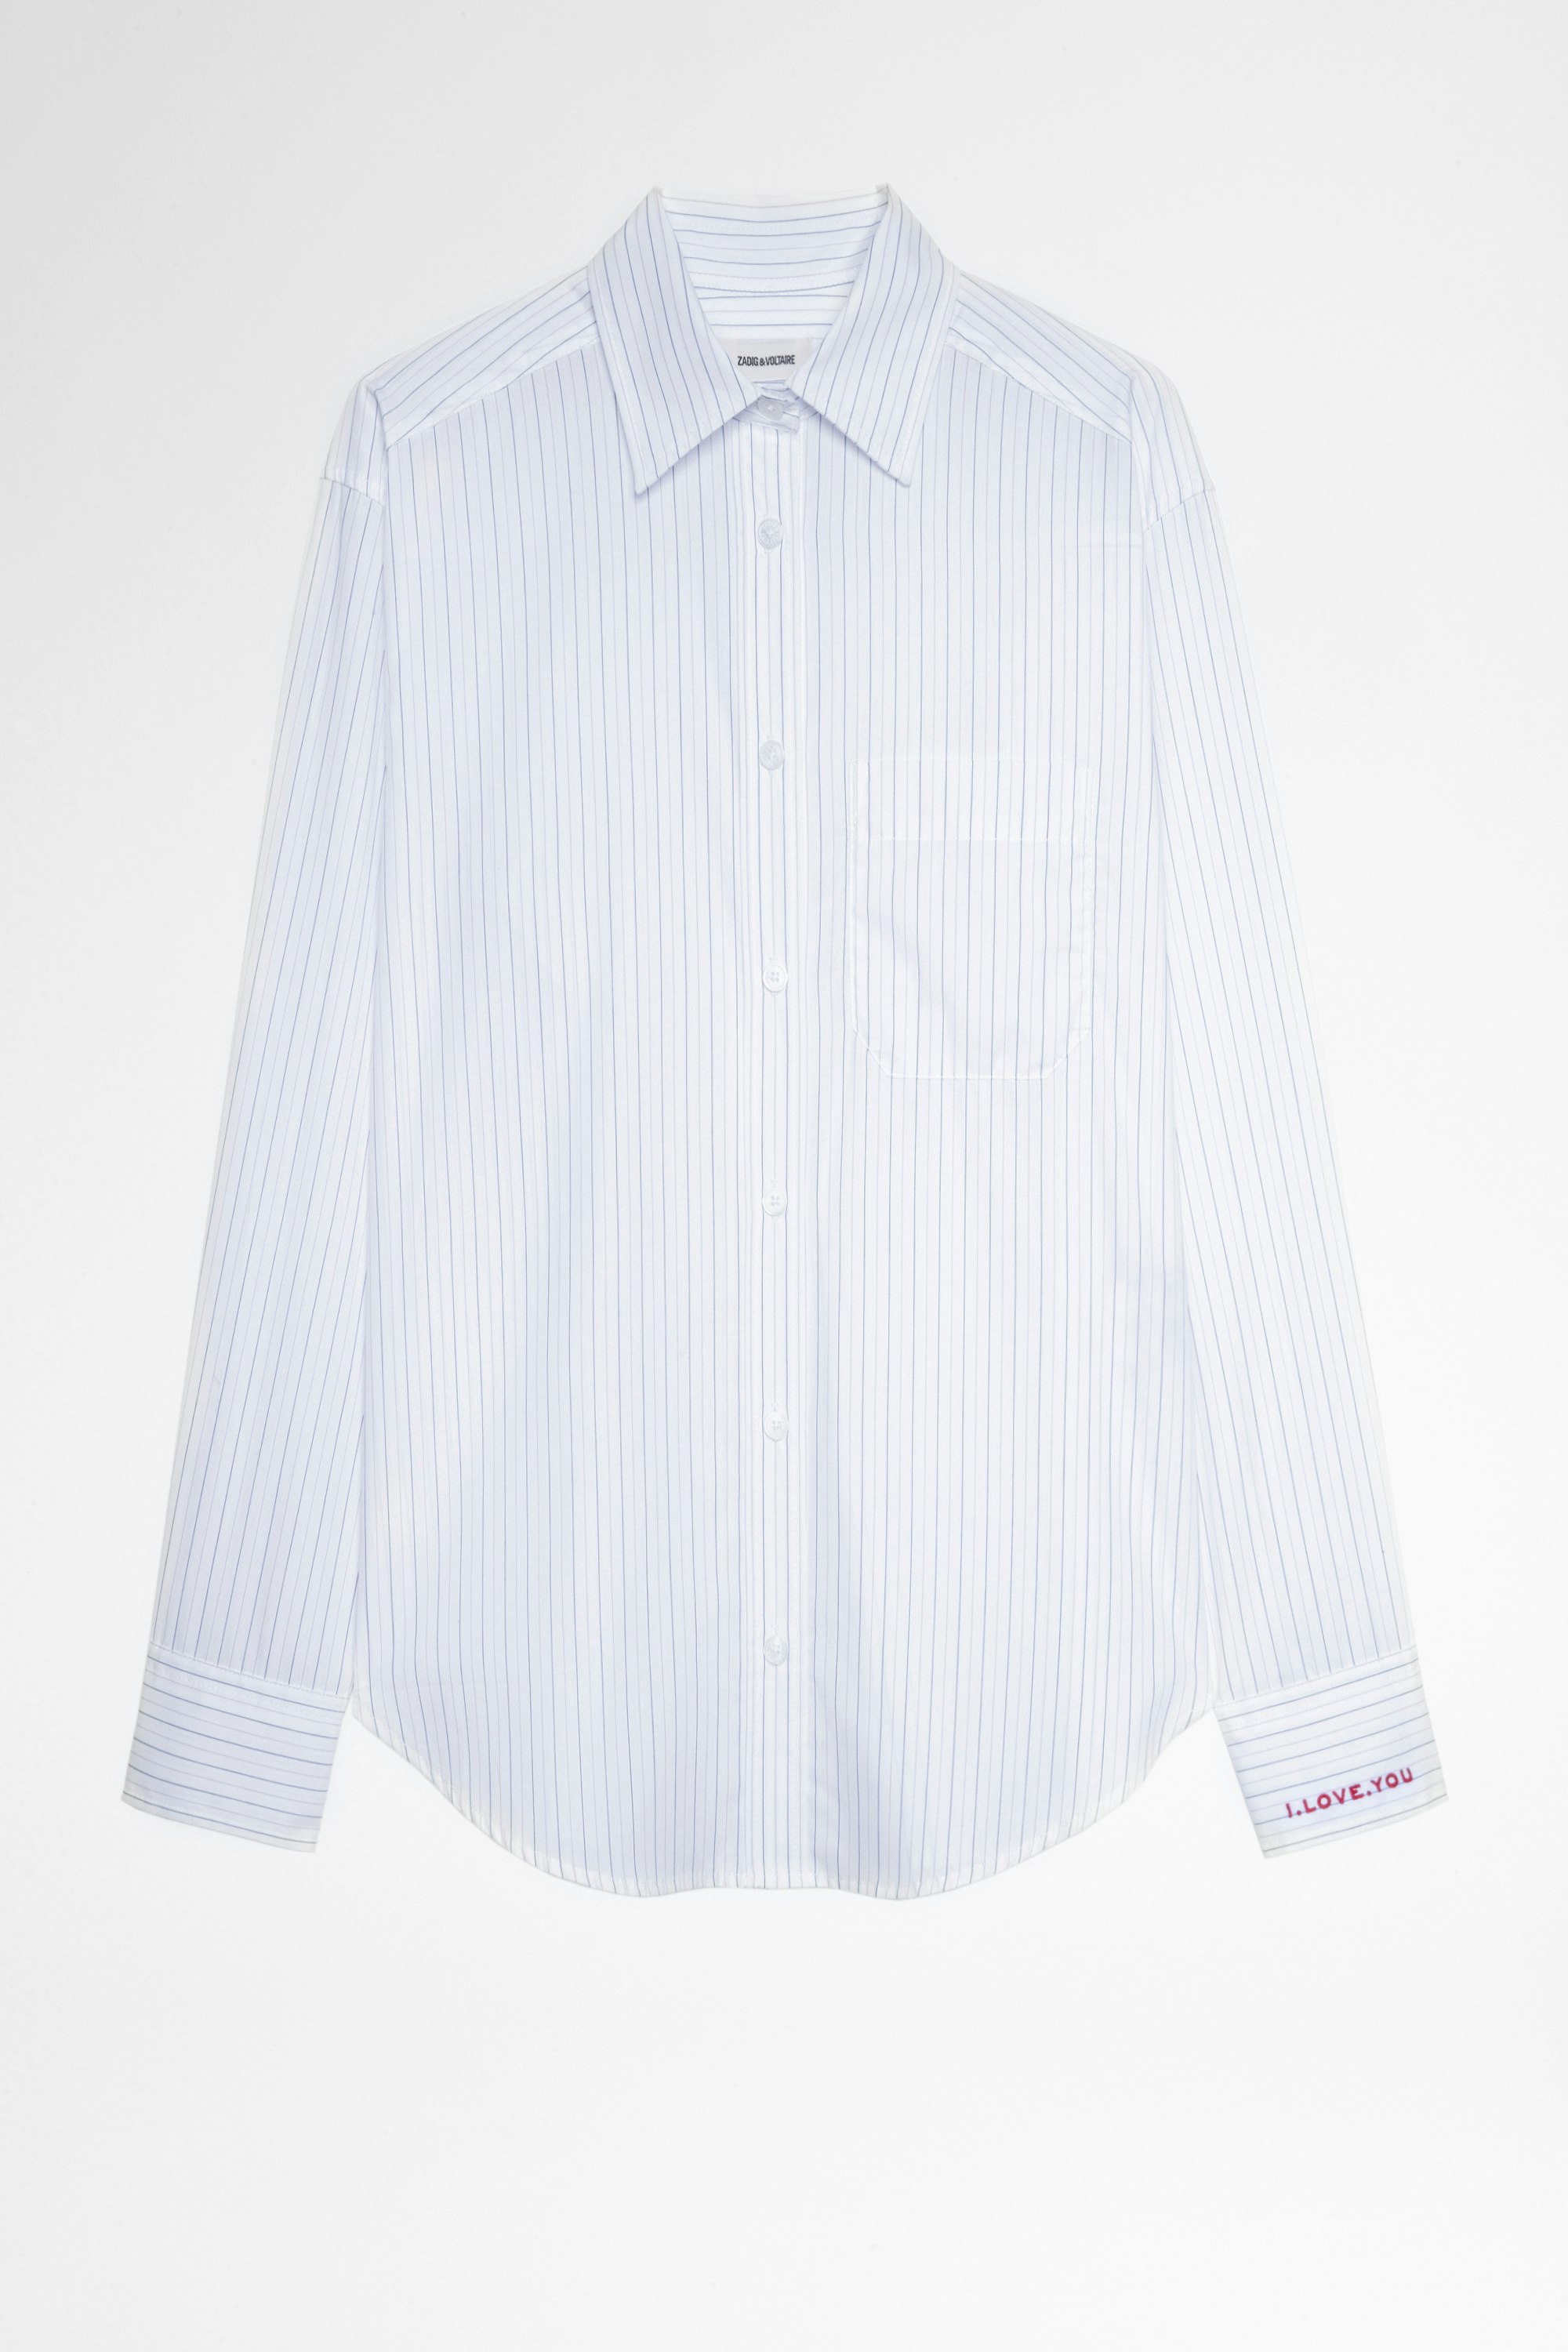 Tais Shirt Women's striped cotton shirt in white. Made with fibers from organic farming.